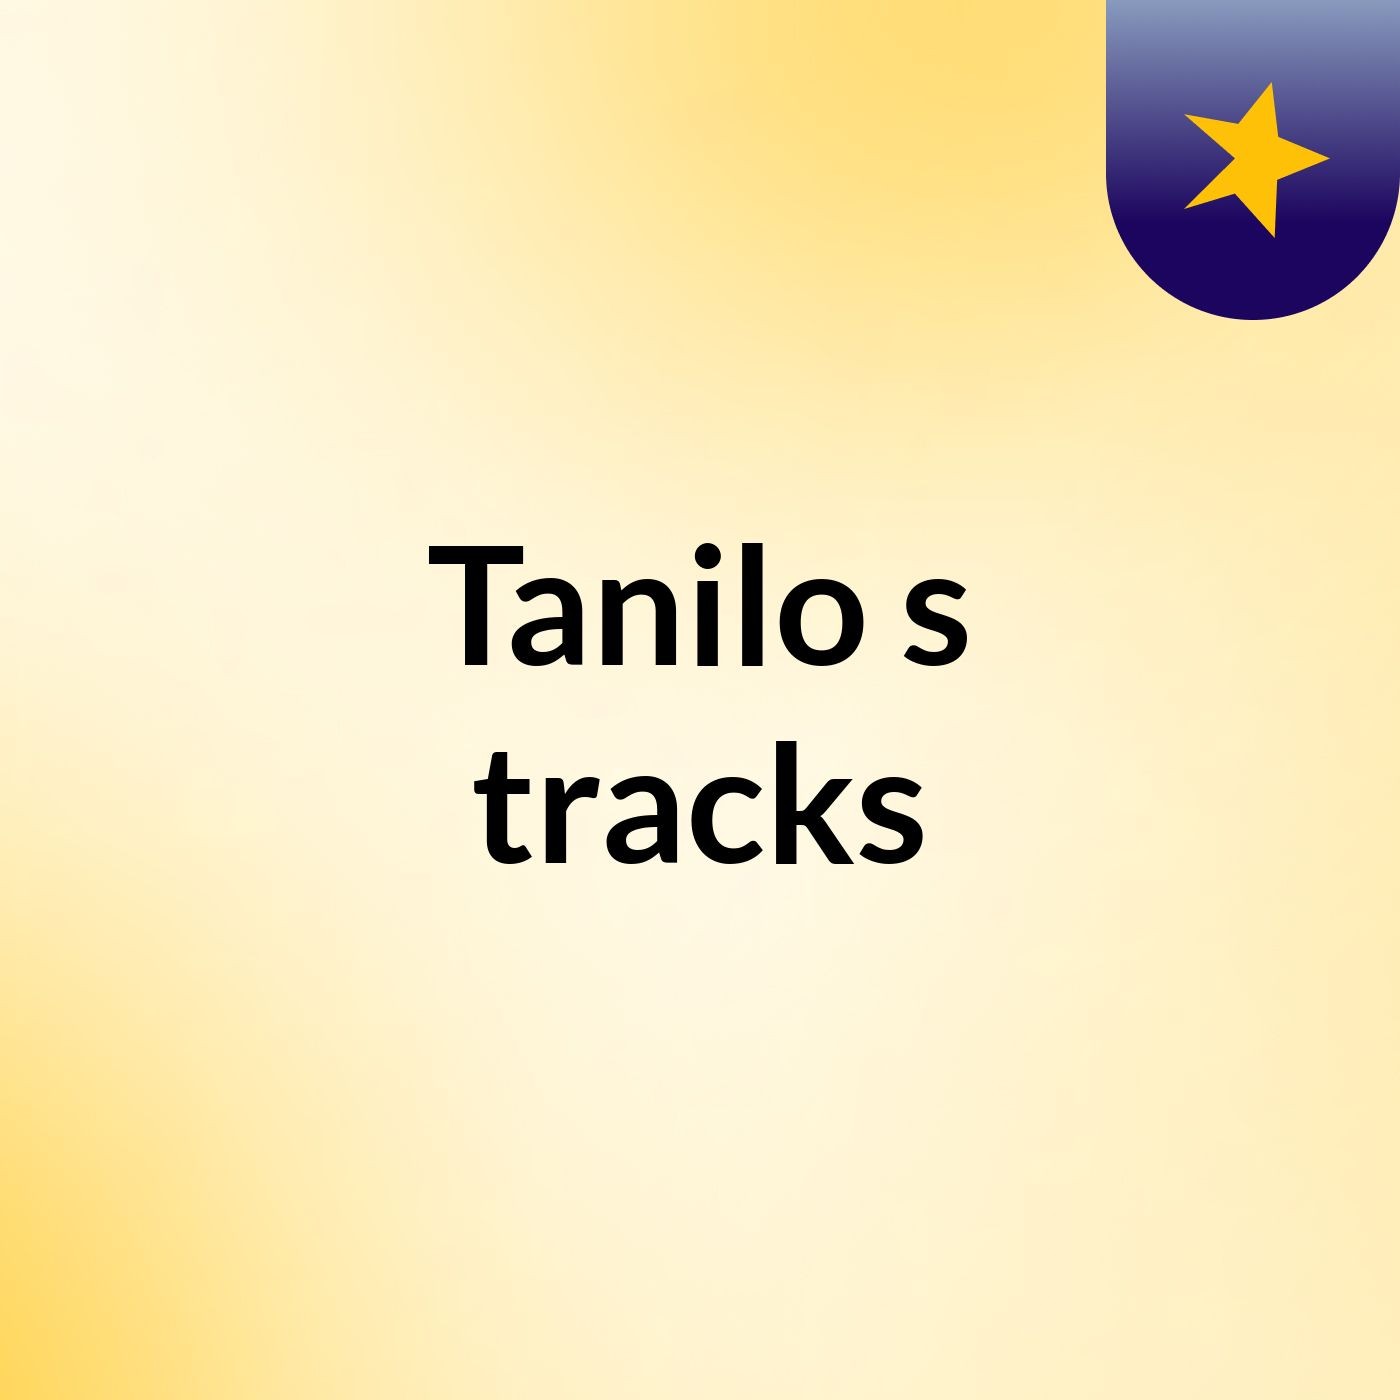 Tanilo's tracks